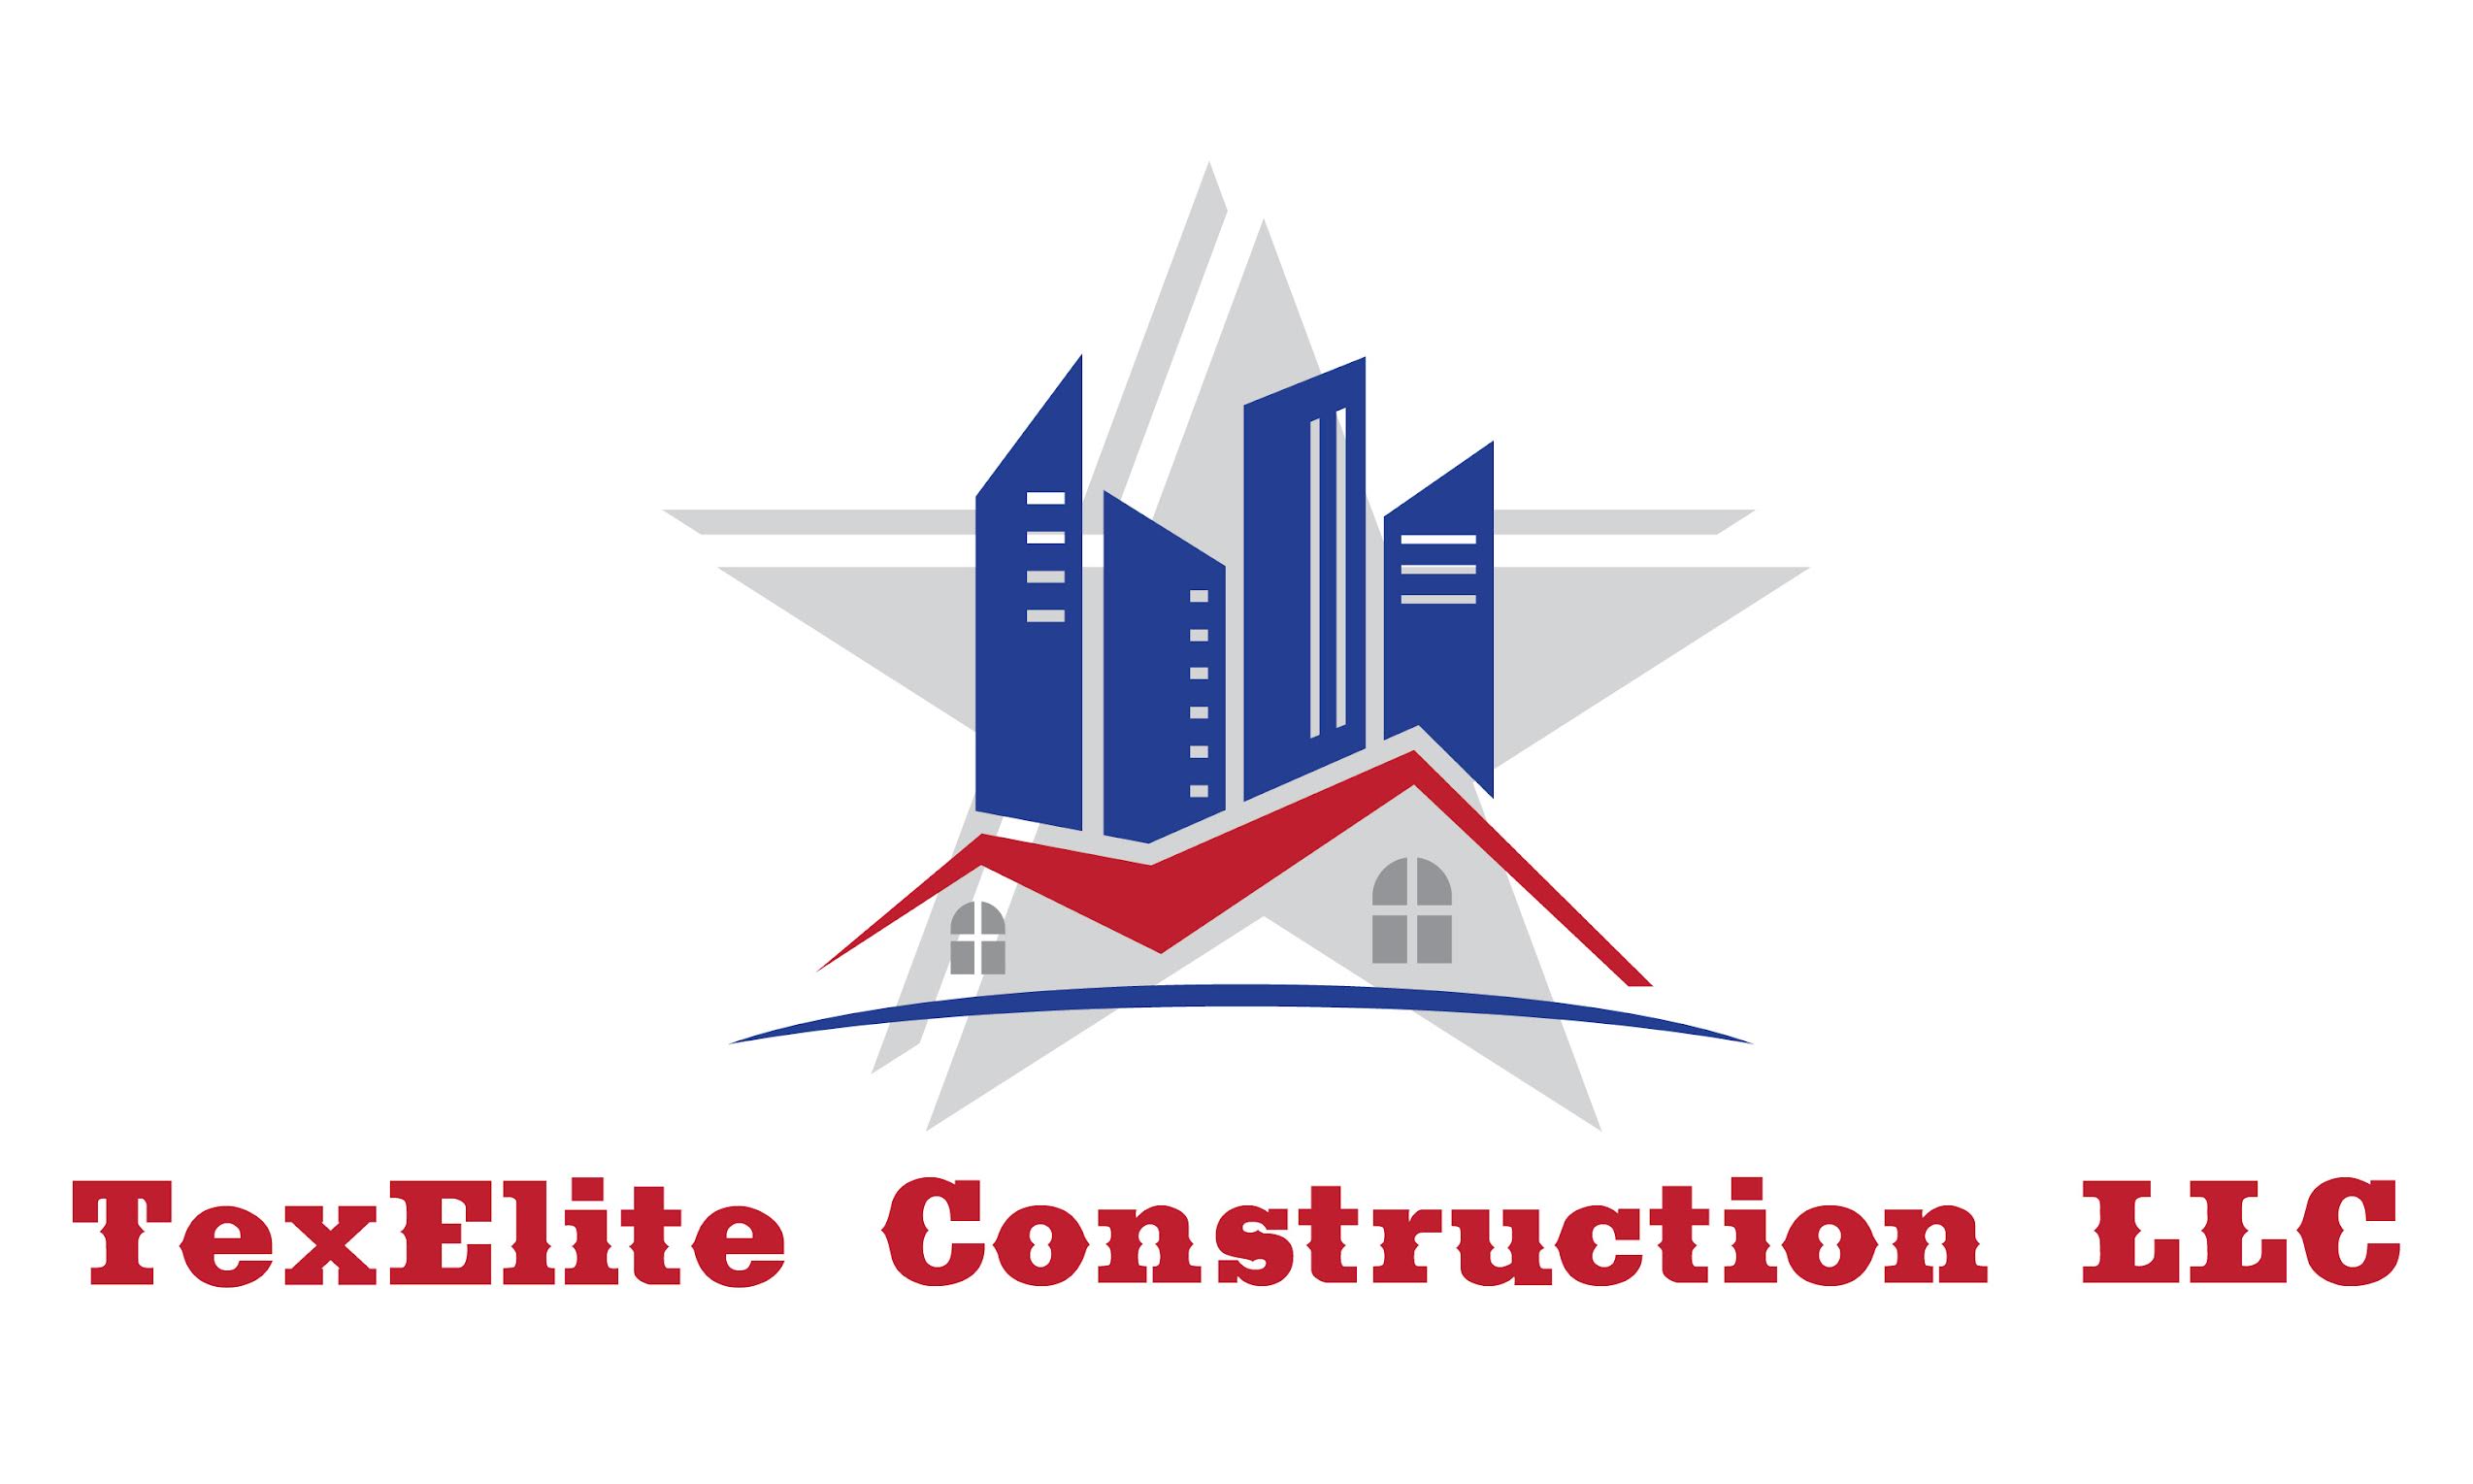 TexElite Construction LLC